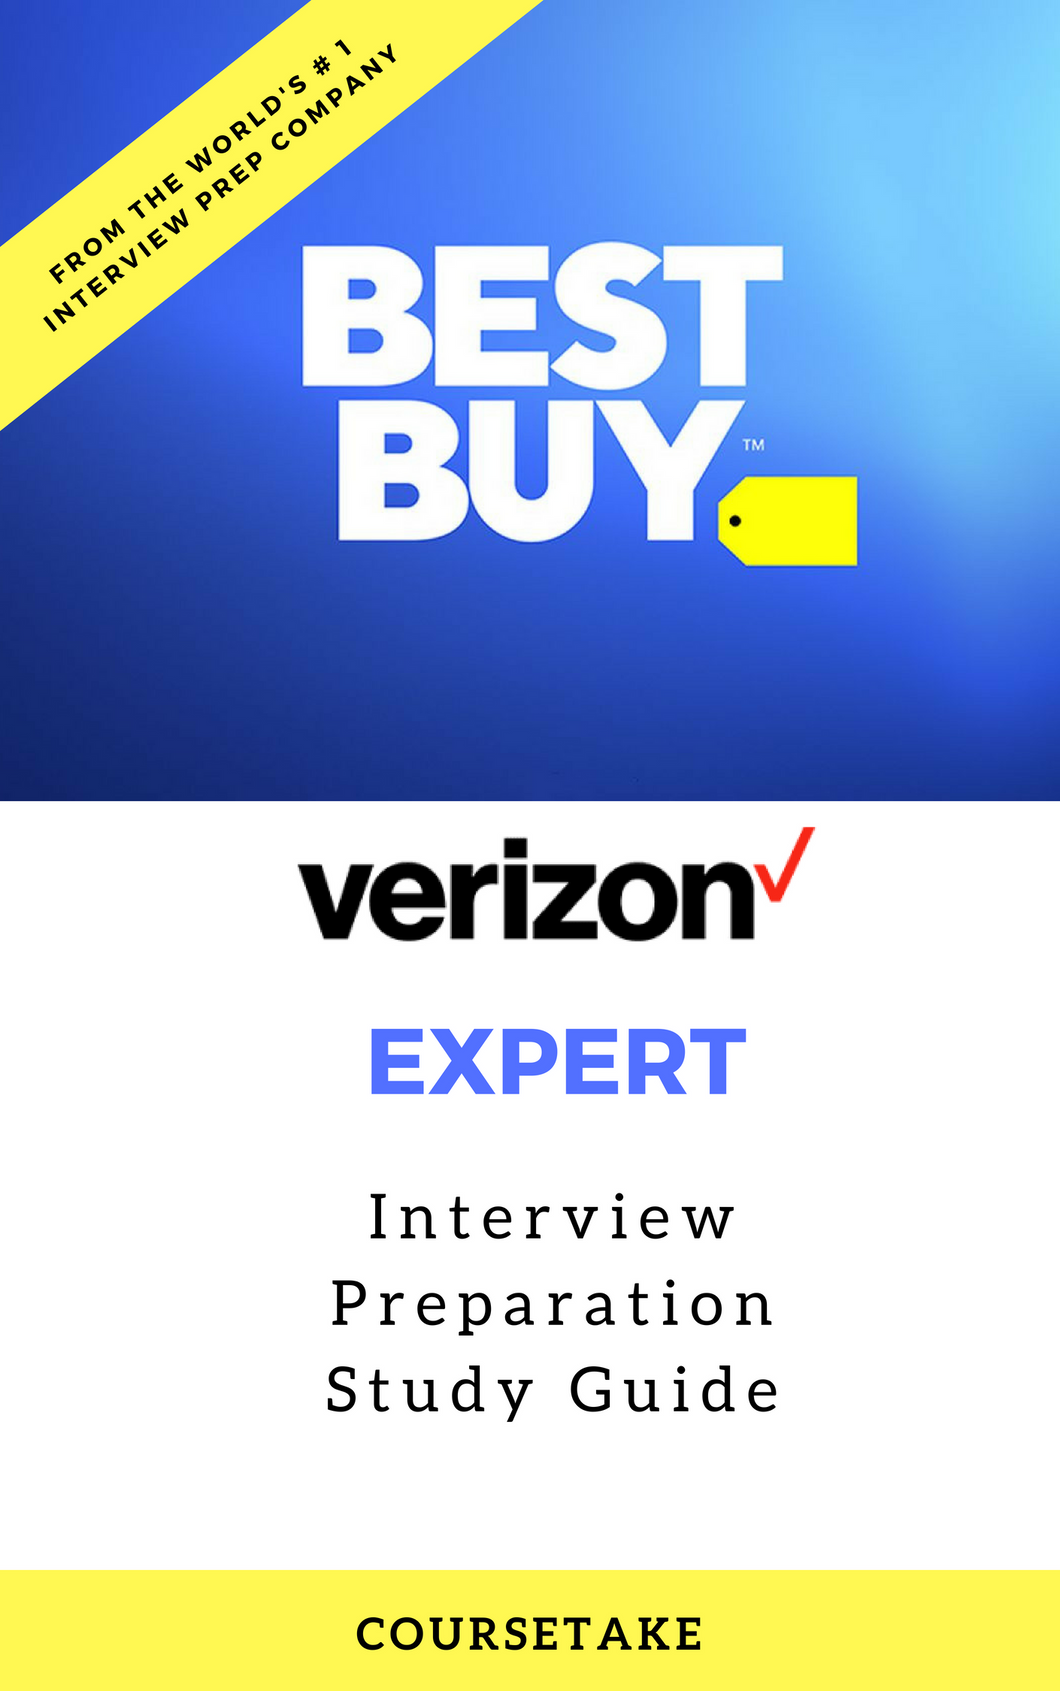 Best Buy Verizon Expert Interview Preparation Study Guide